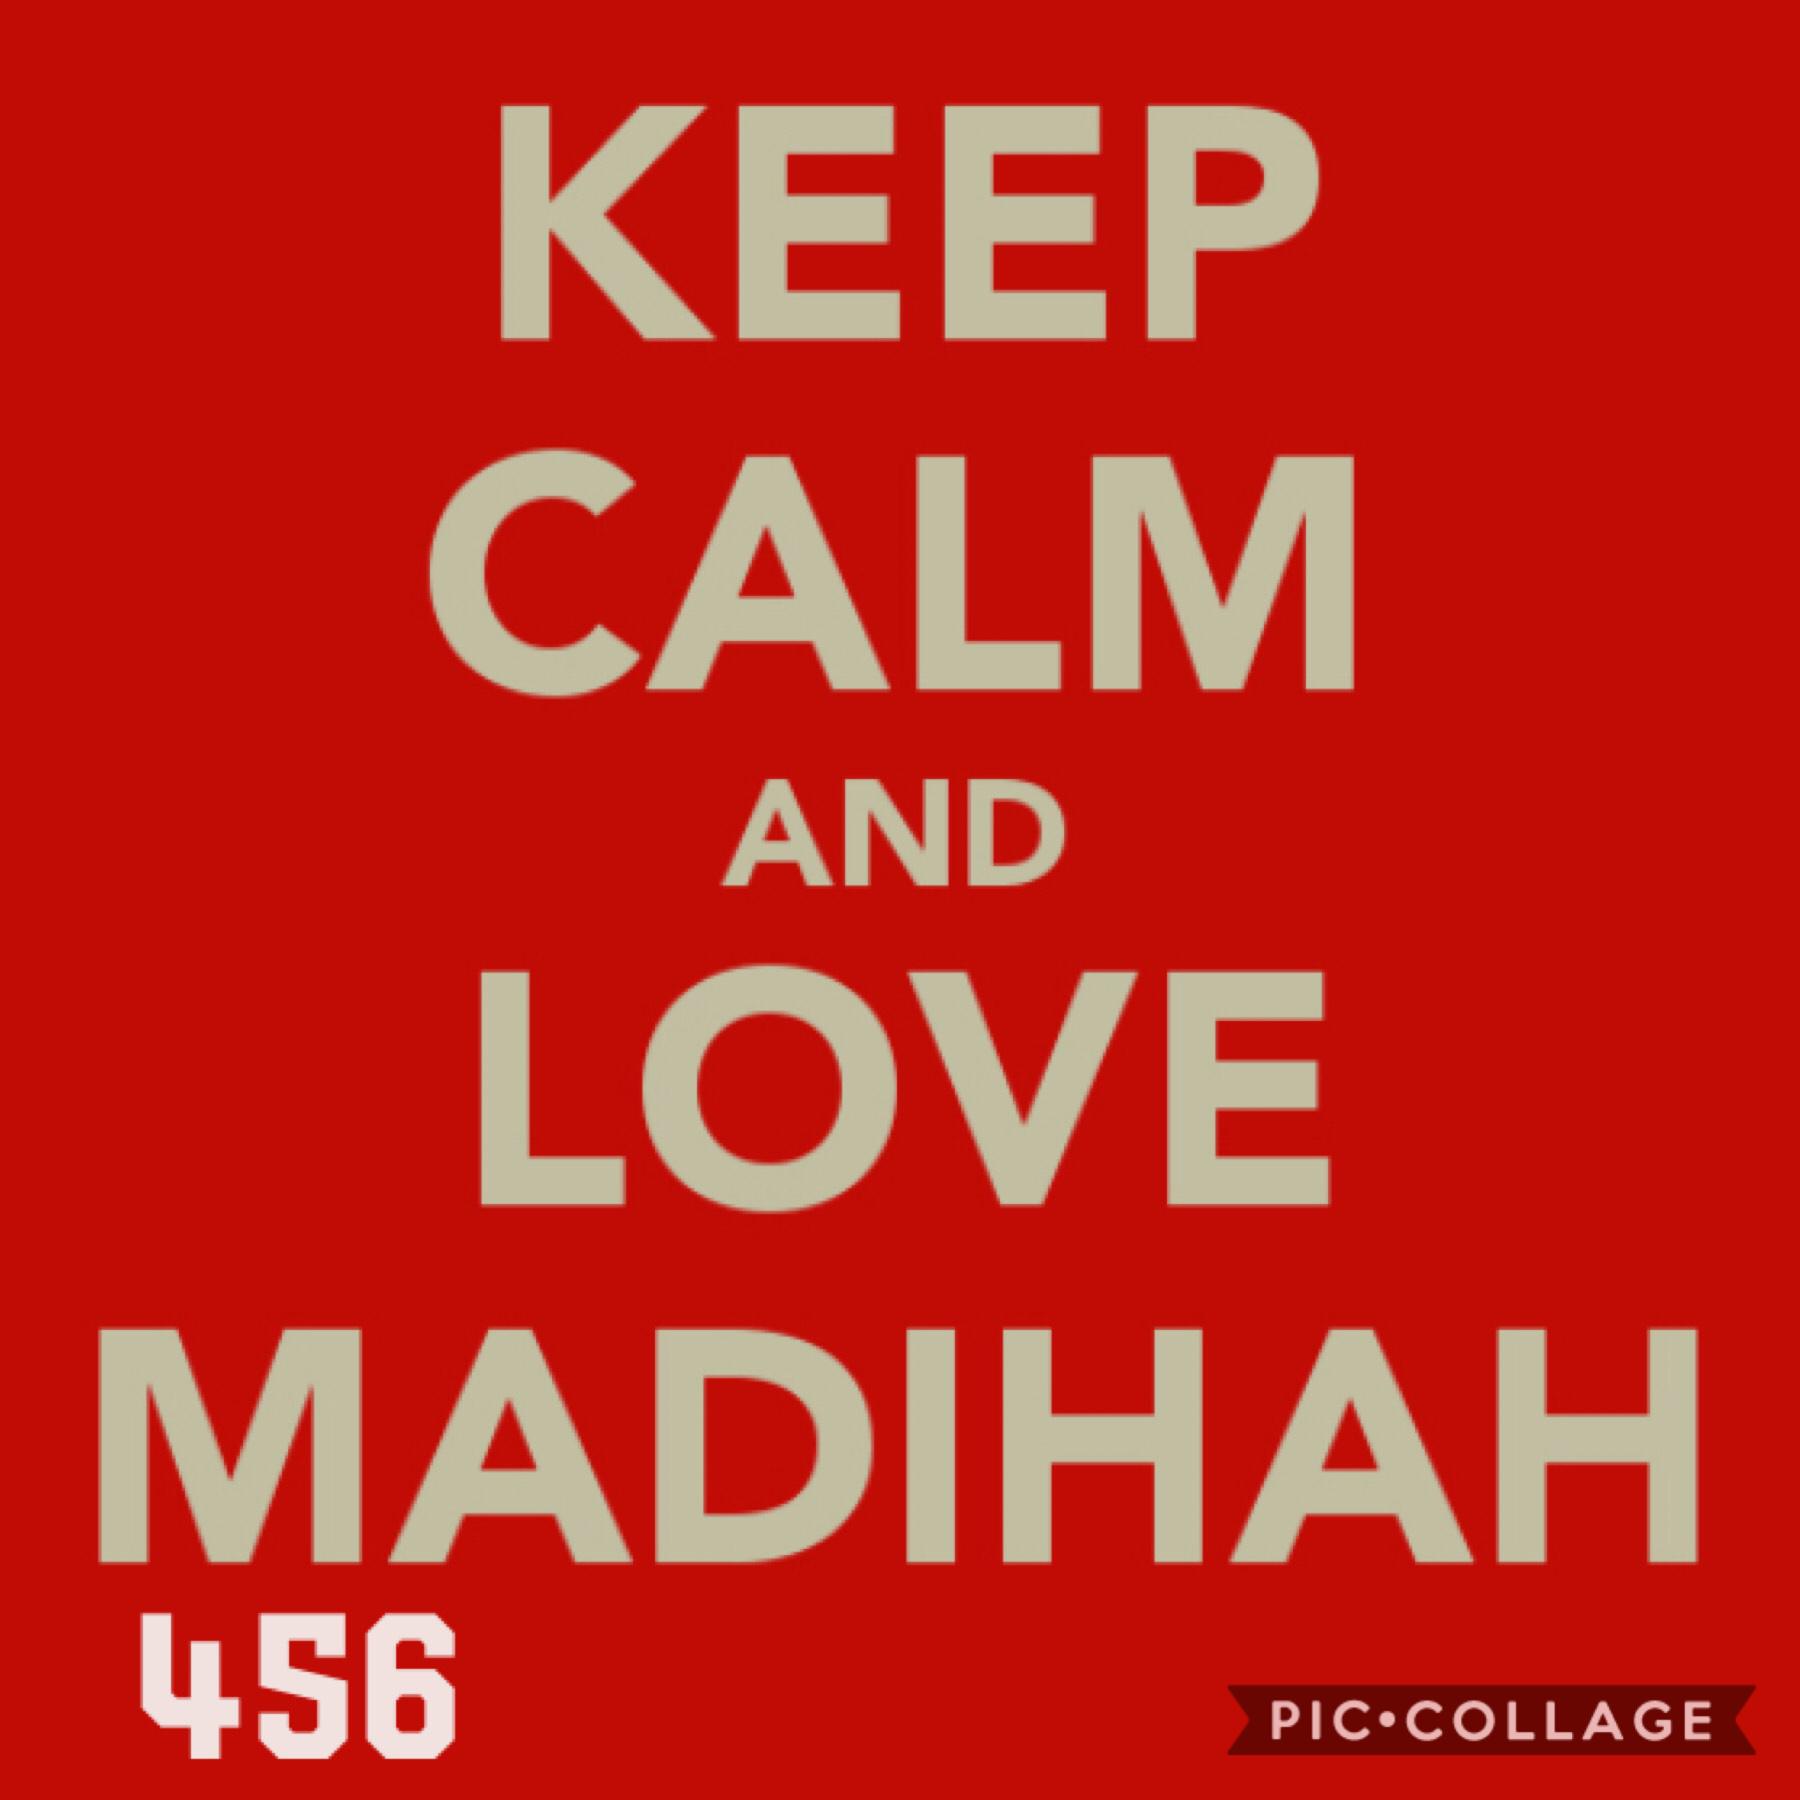 Go Madihah456 